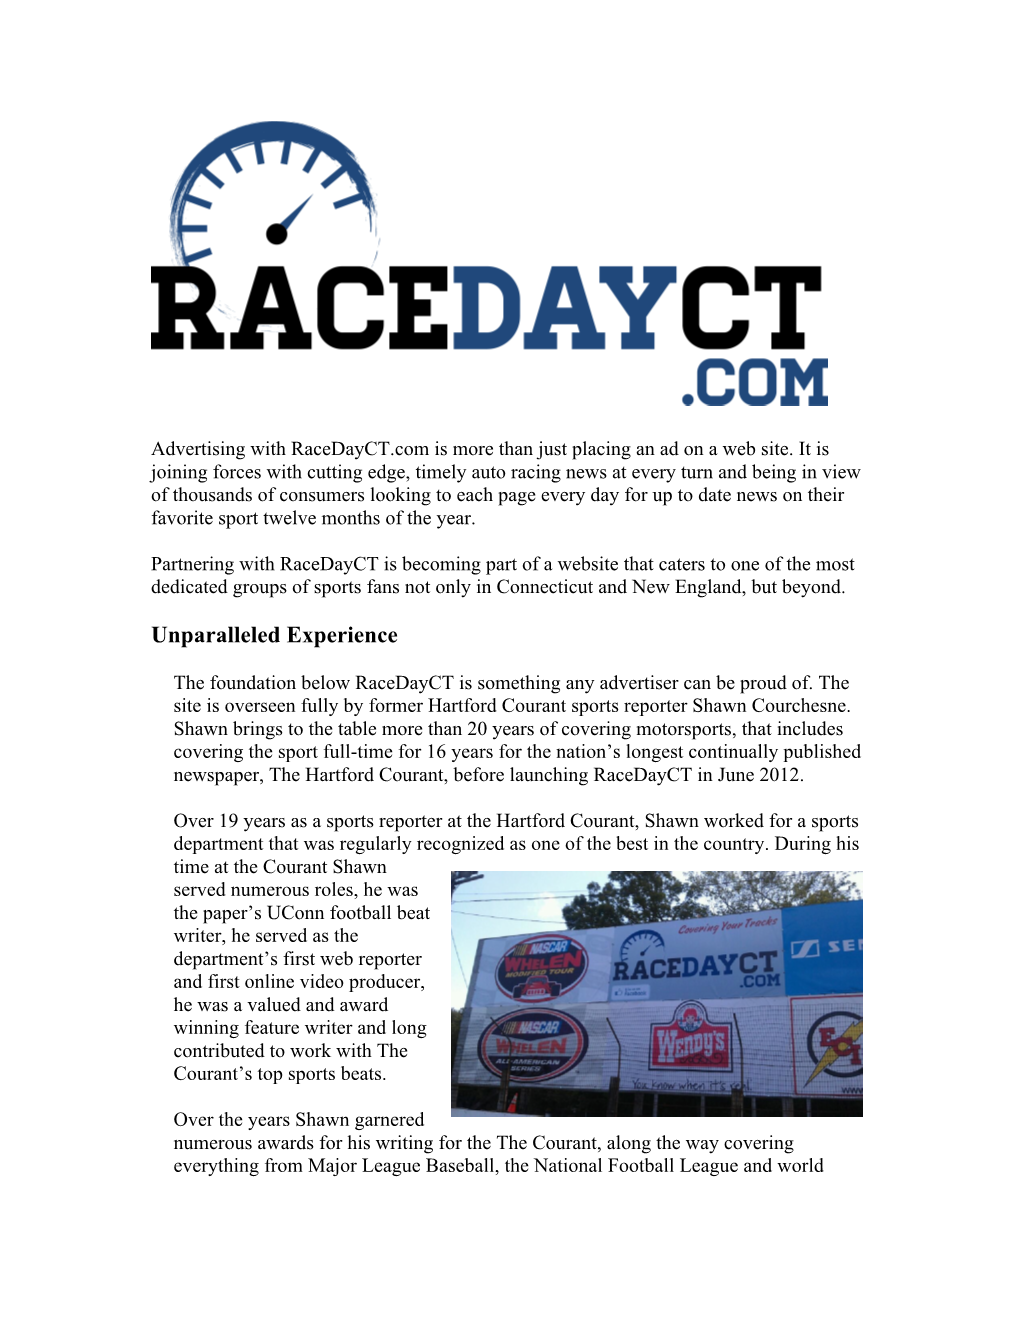 Racedayct Advertiser Information